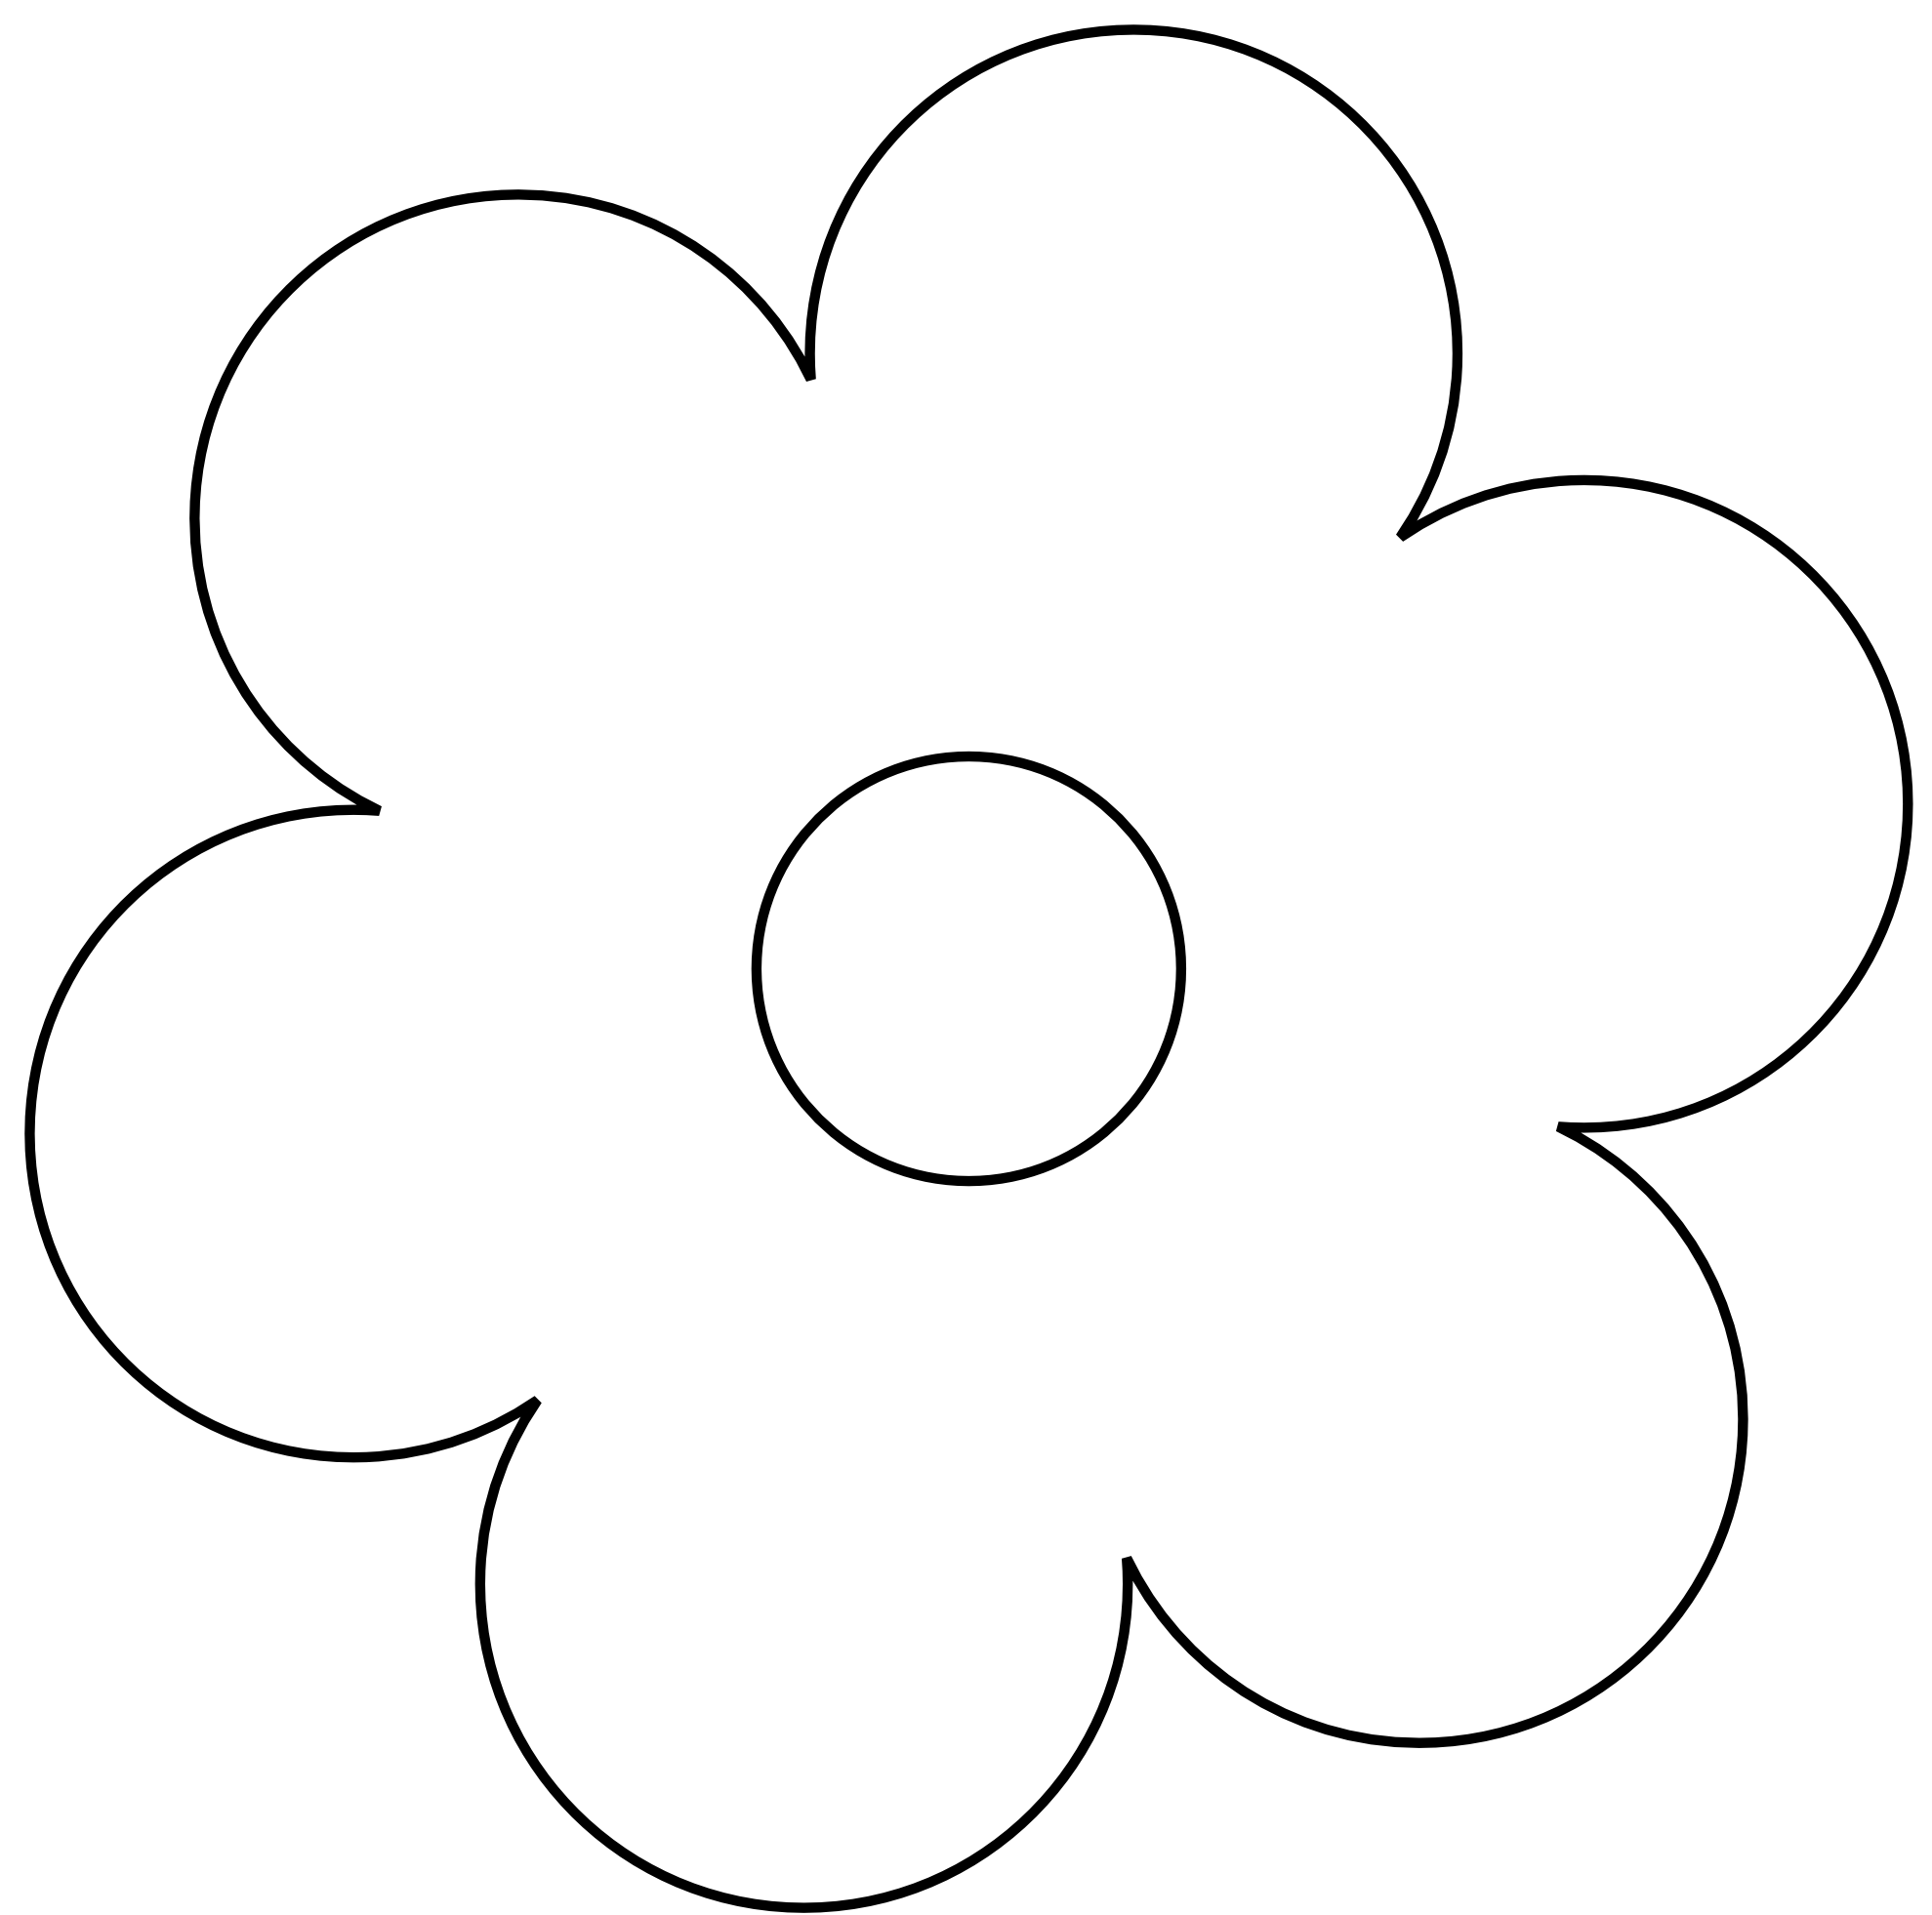 Black And White Flower Clipart